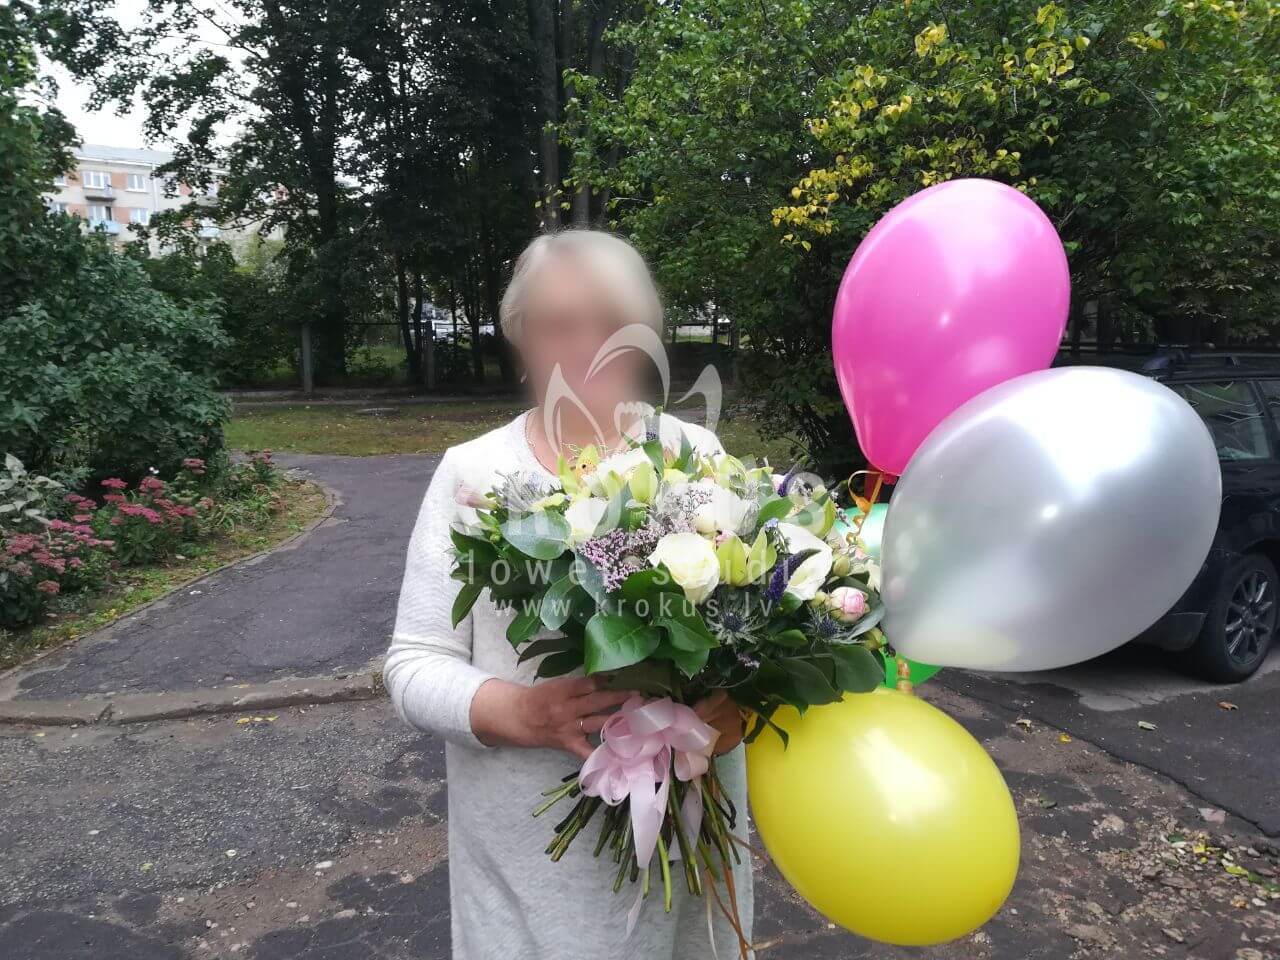 Deliver flowers to Rīga (meadow flowerslimoniumgoldenrodlupinebruniaorchidswhite rosesveronicablue cornflowercheesewoodpeoniesdavid austin roses)